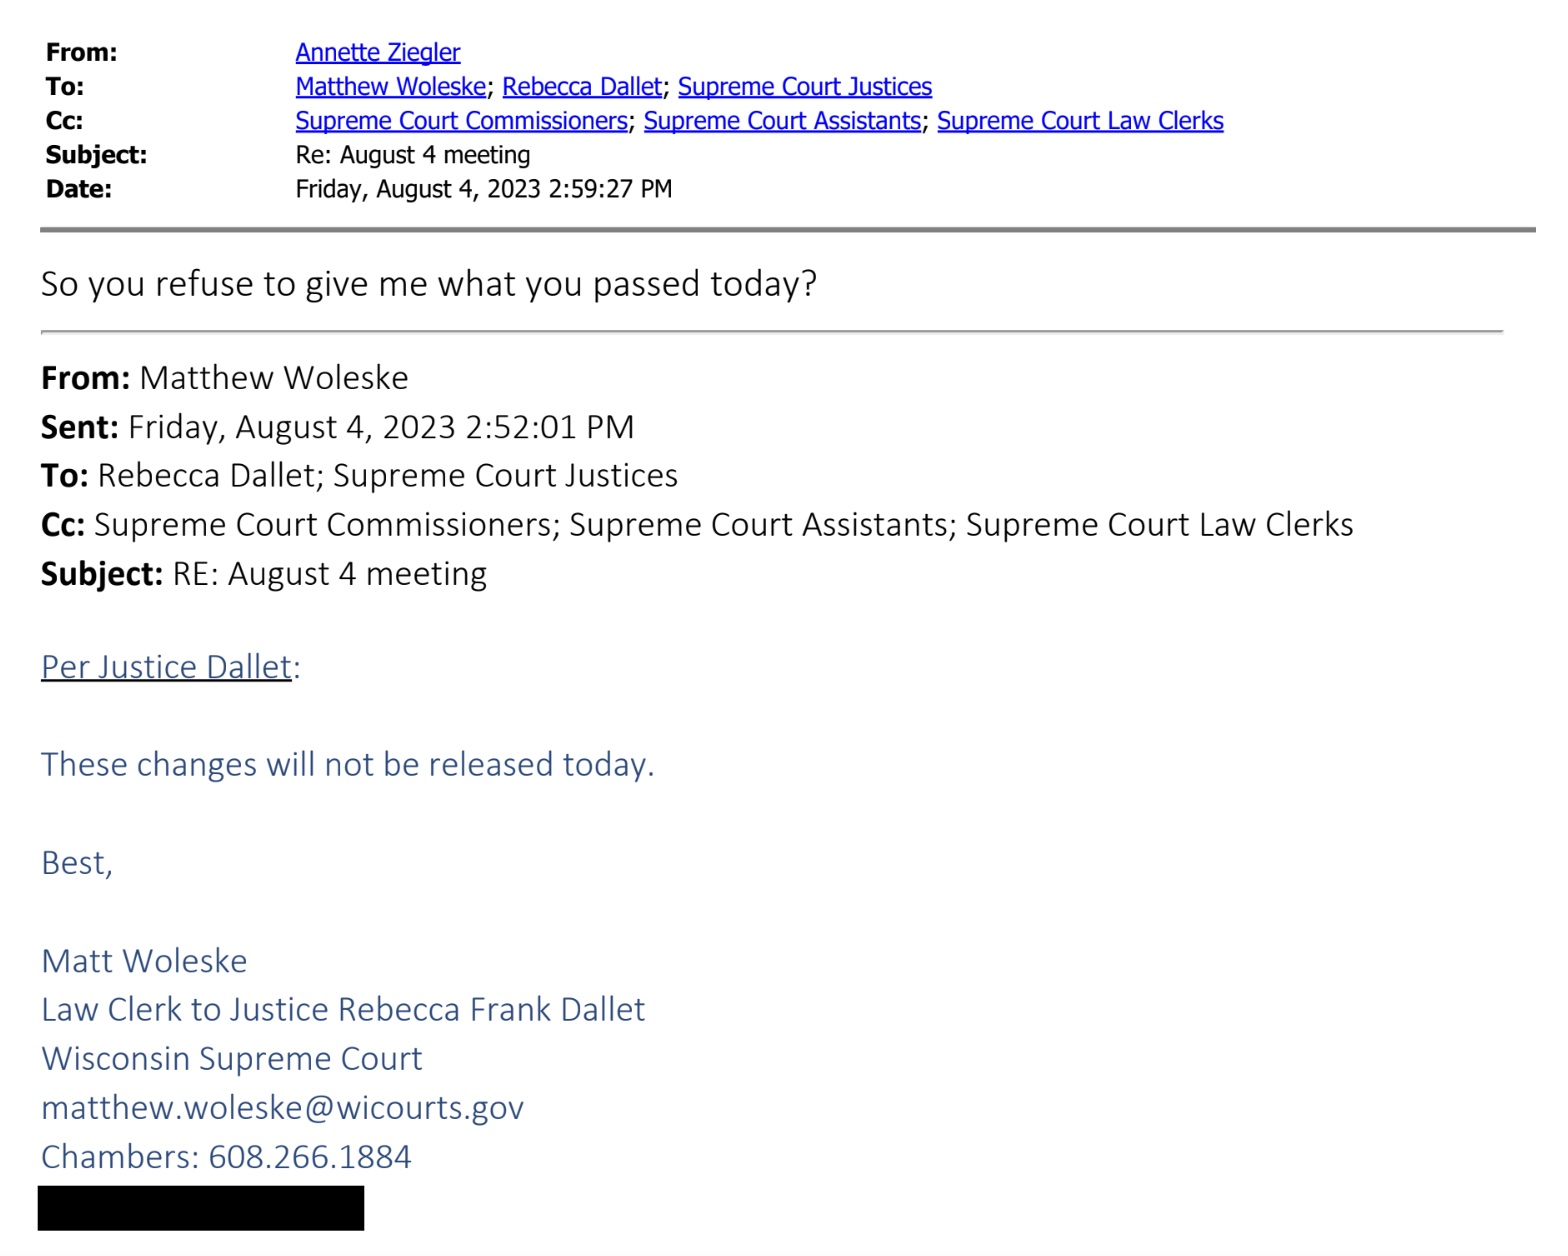 Chief Justice Annette Ziegler email